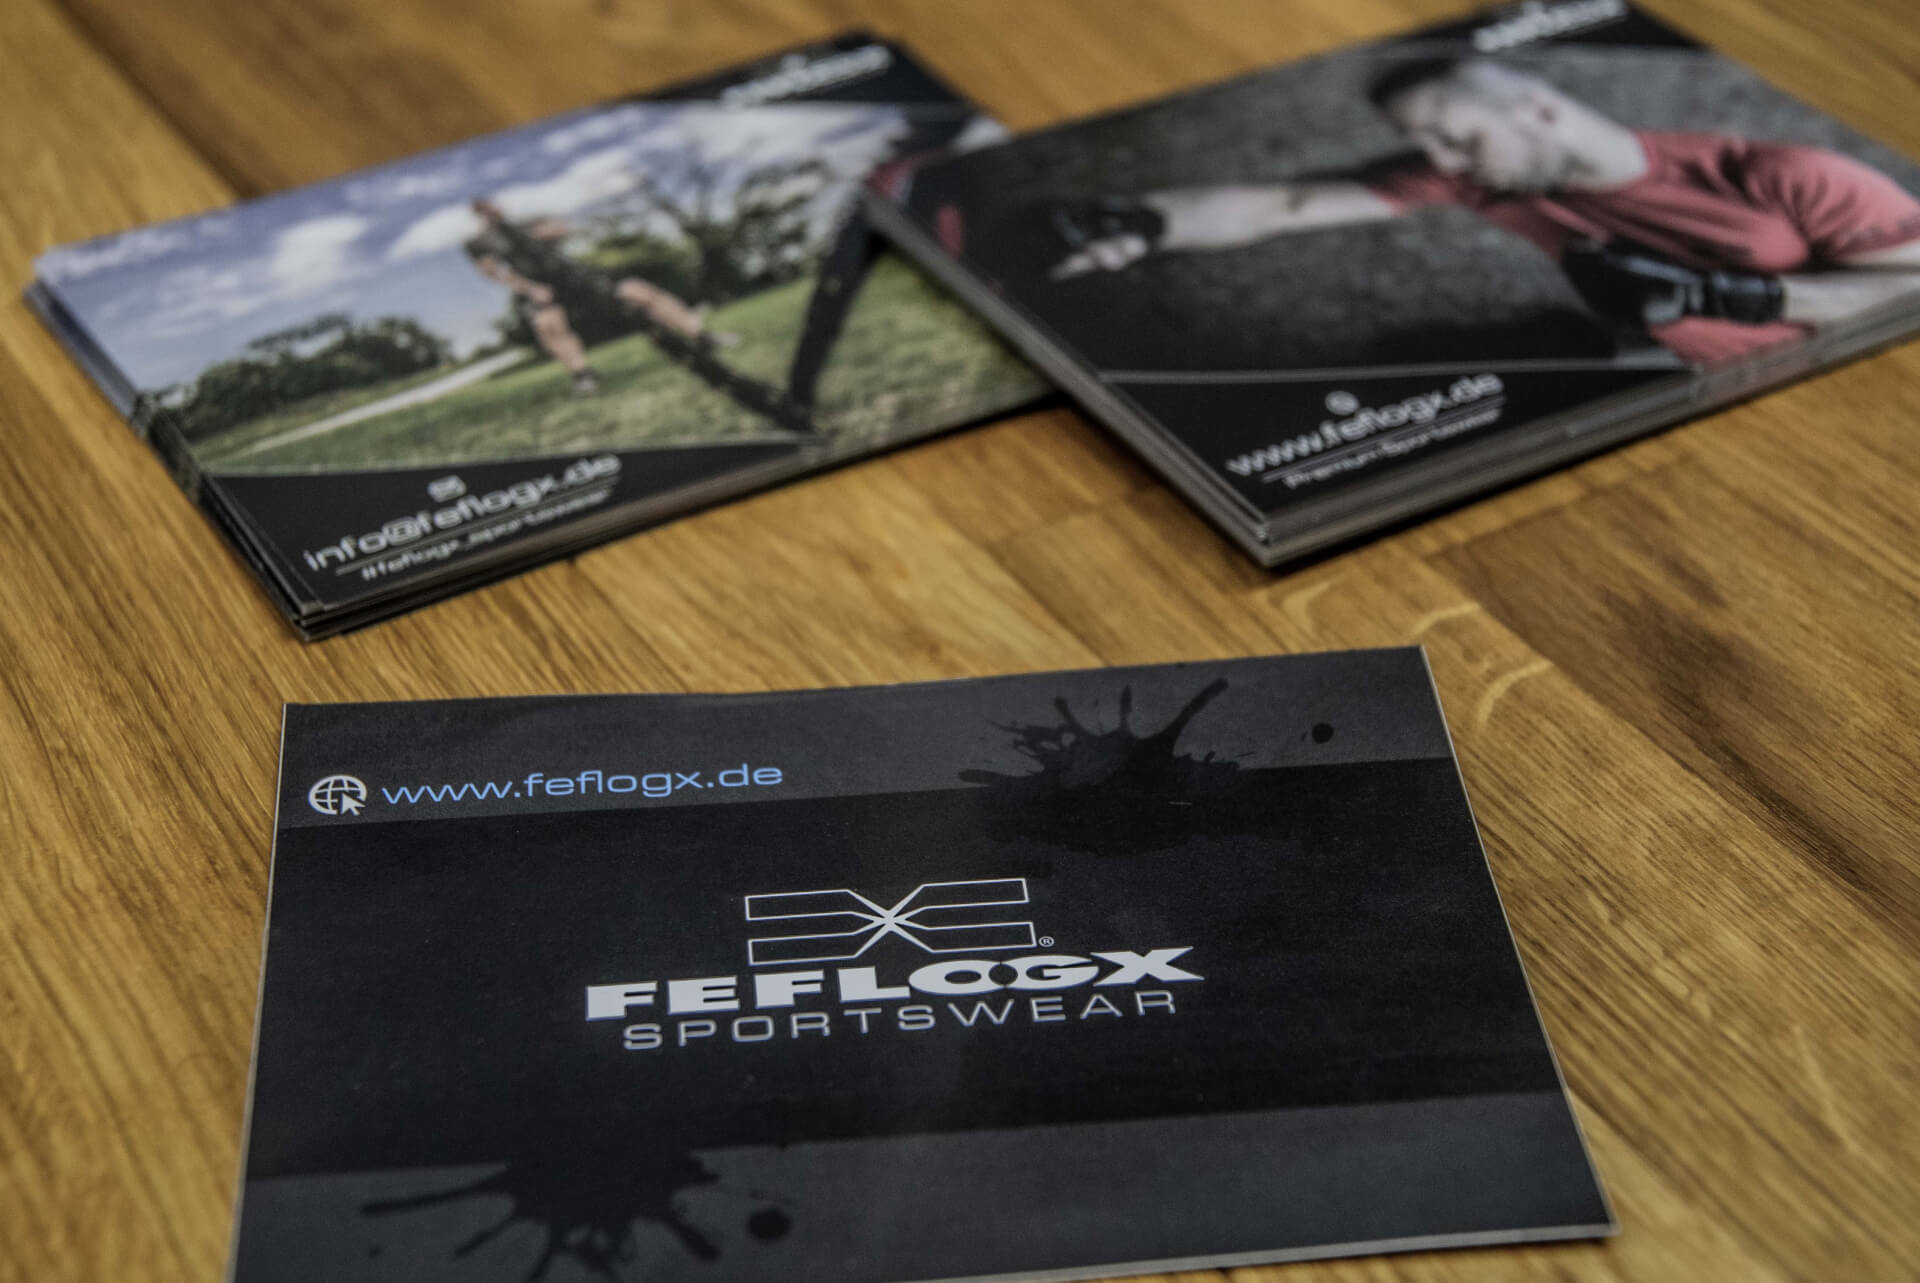 FEFLOGX Sportswear Flyer und Sticker Wahnsinn, Marketing.